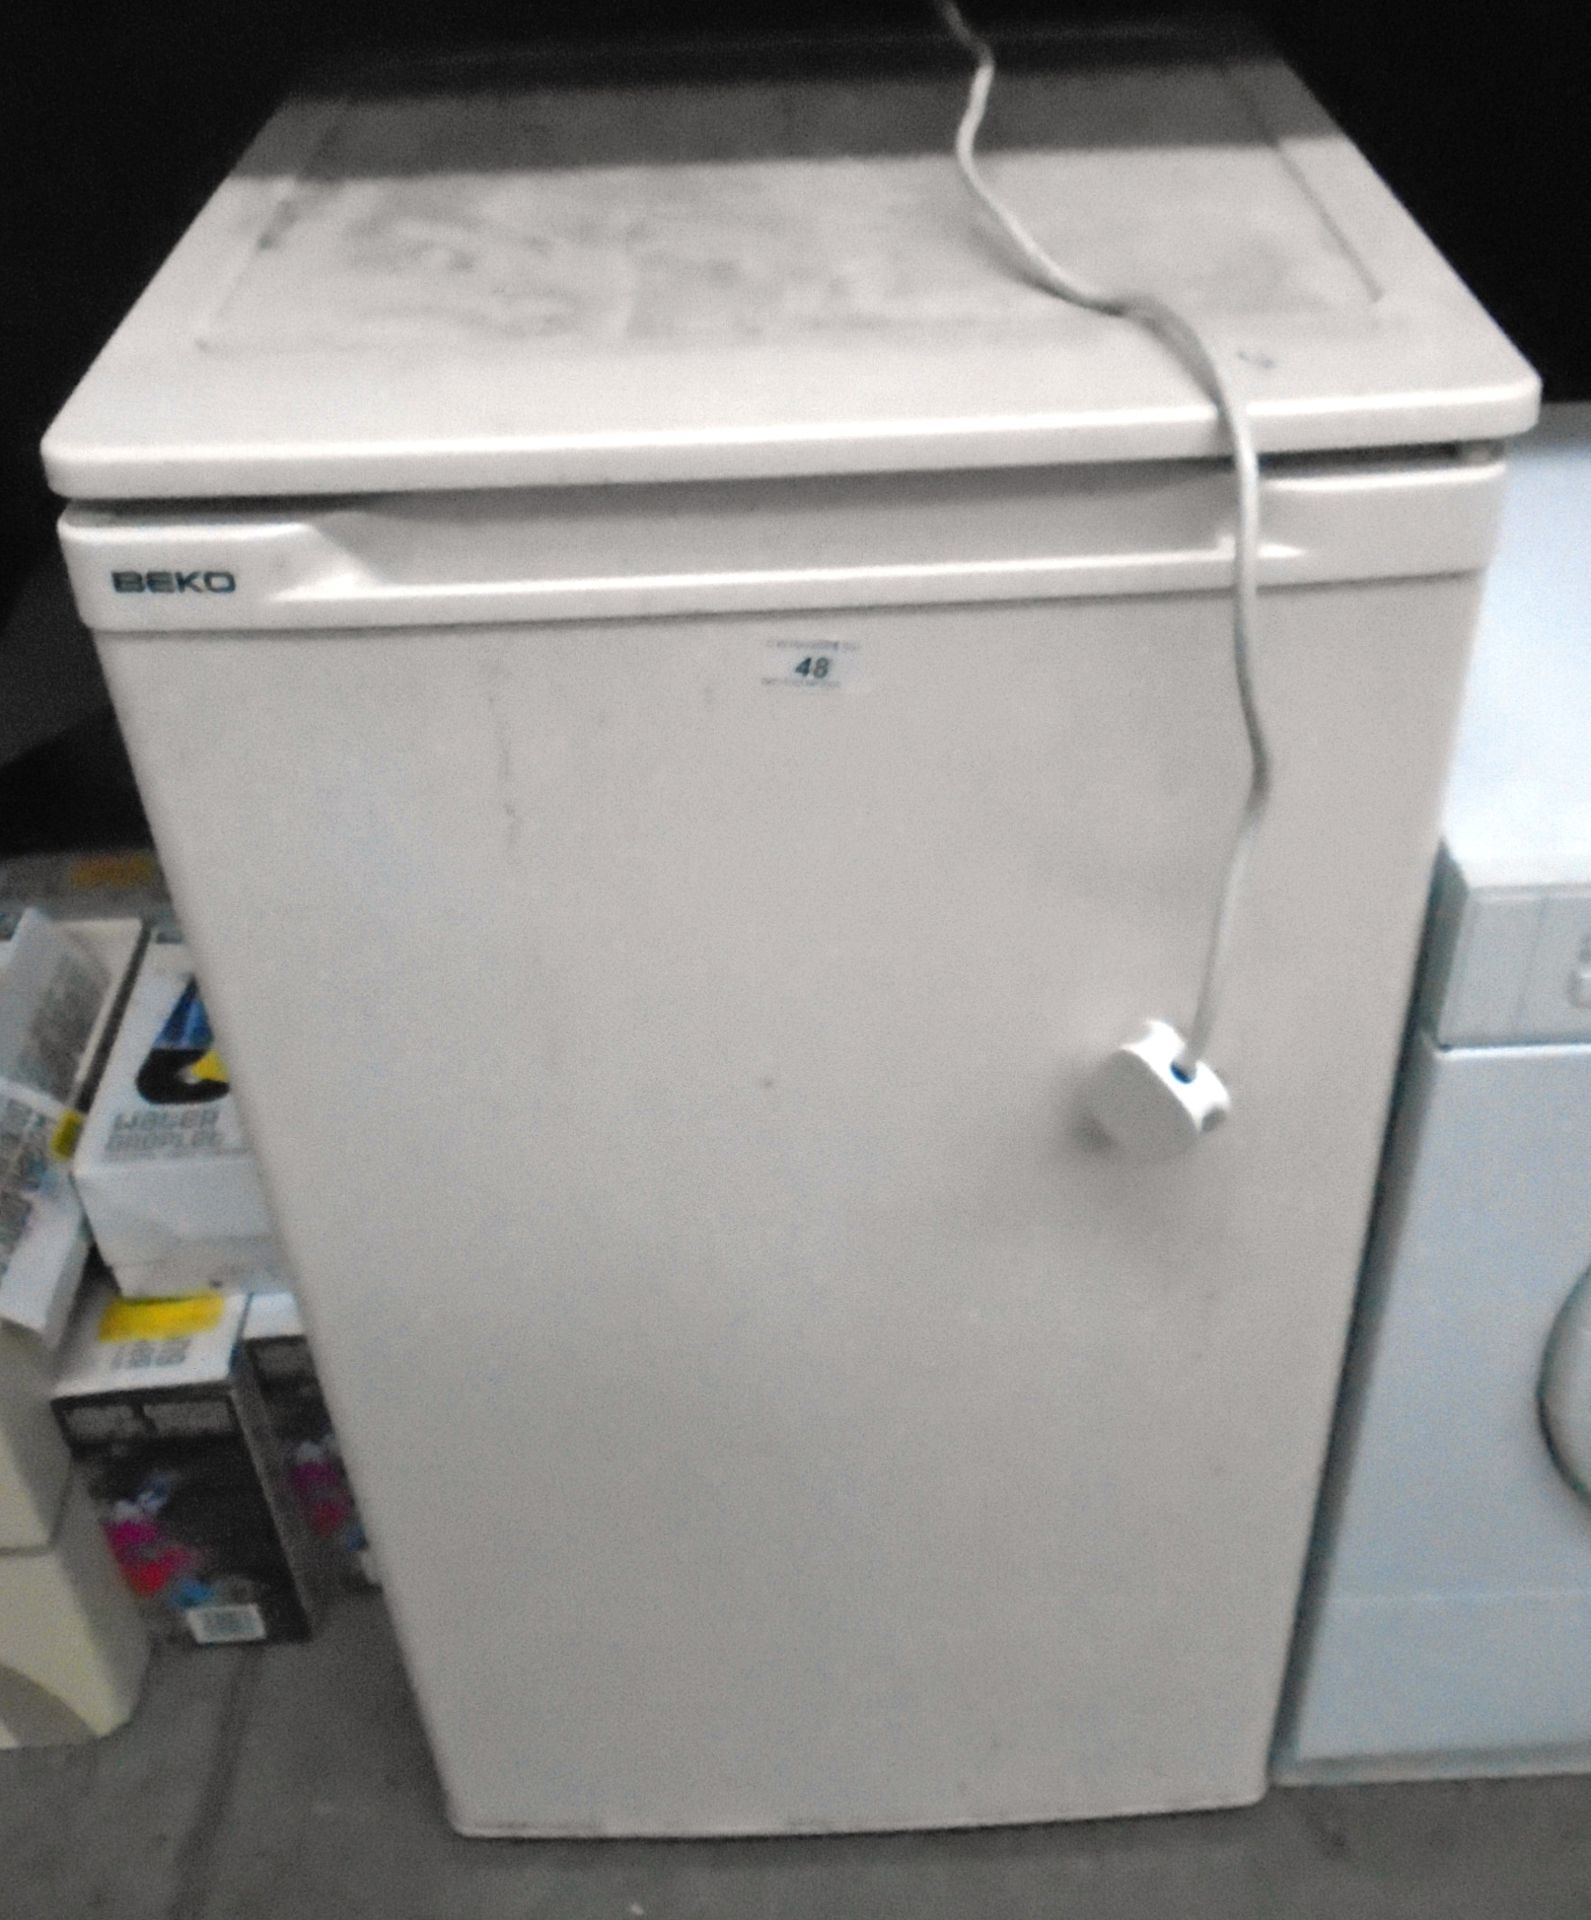 A Beko white under counter fridge